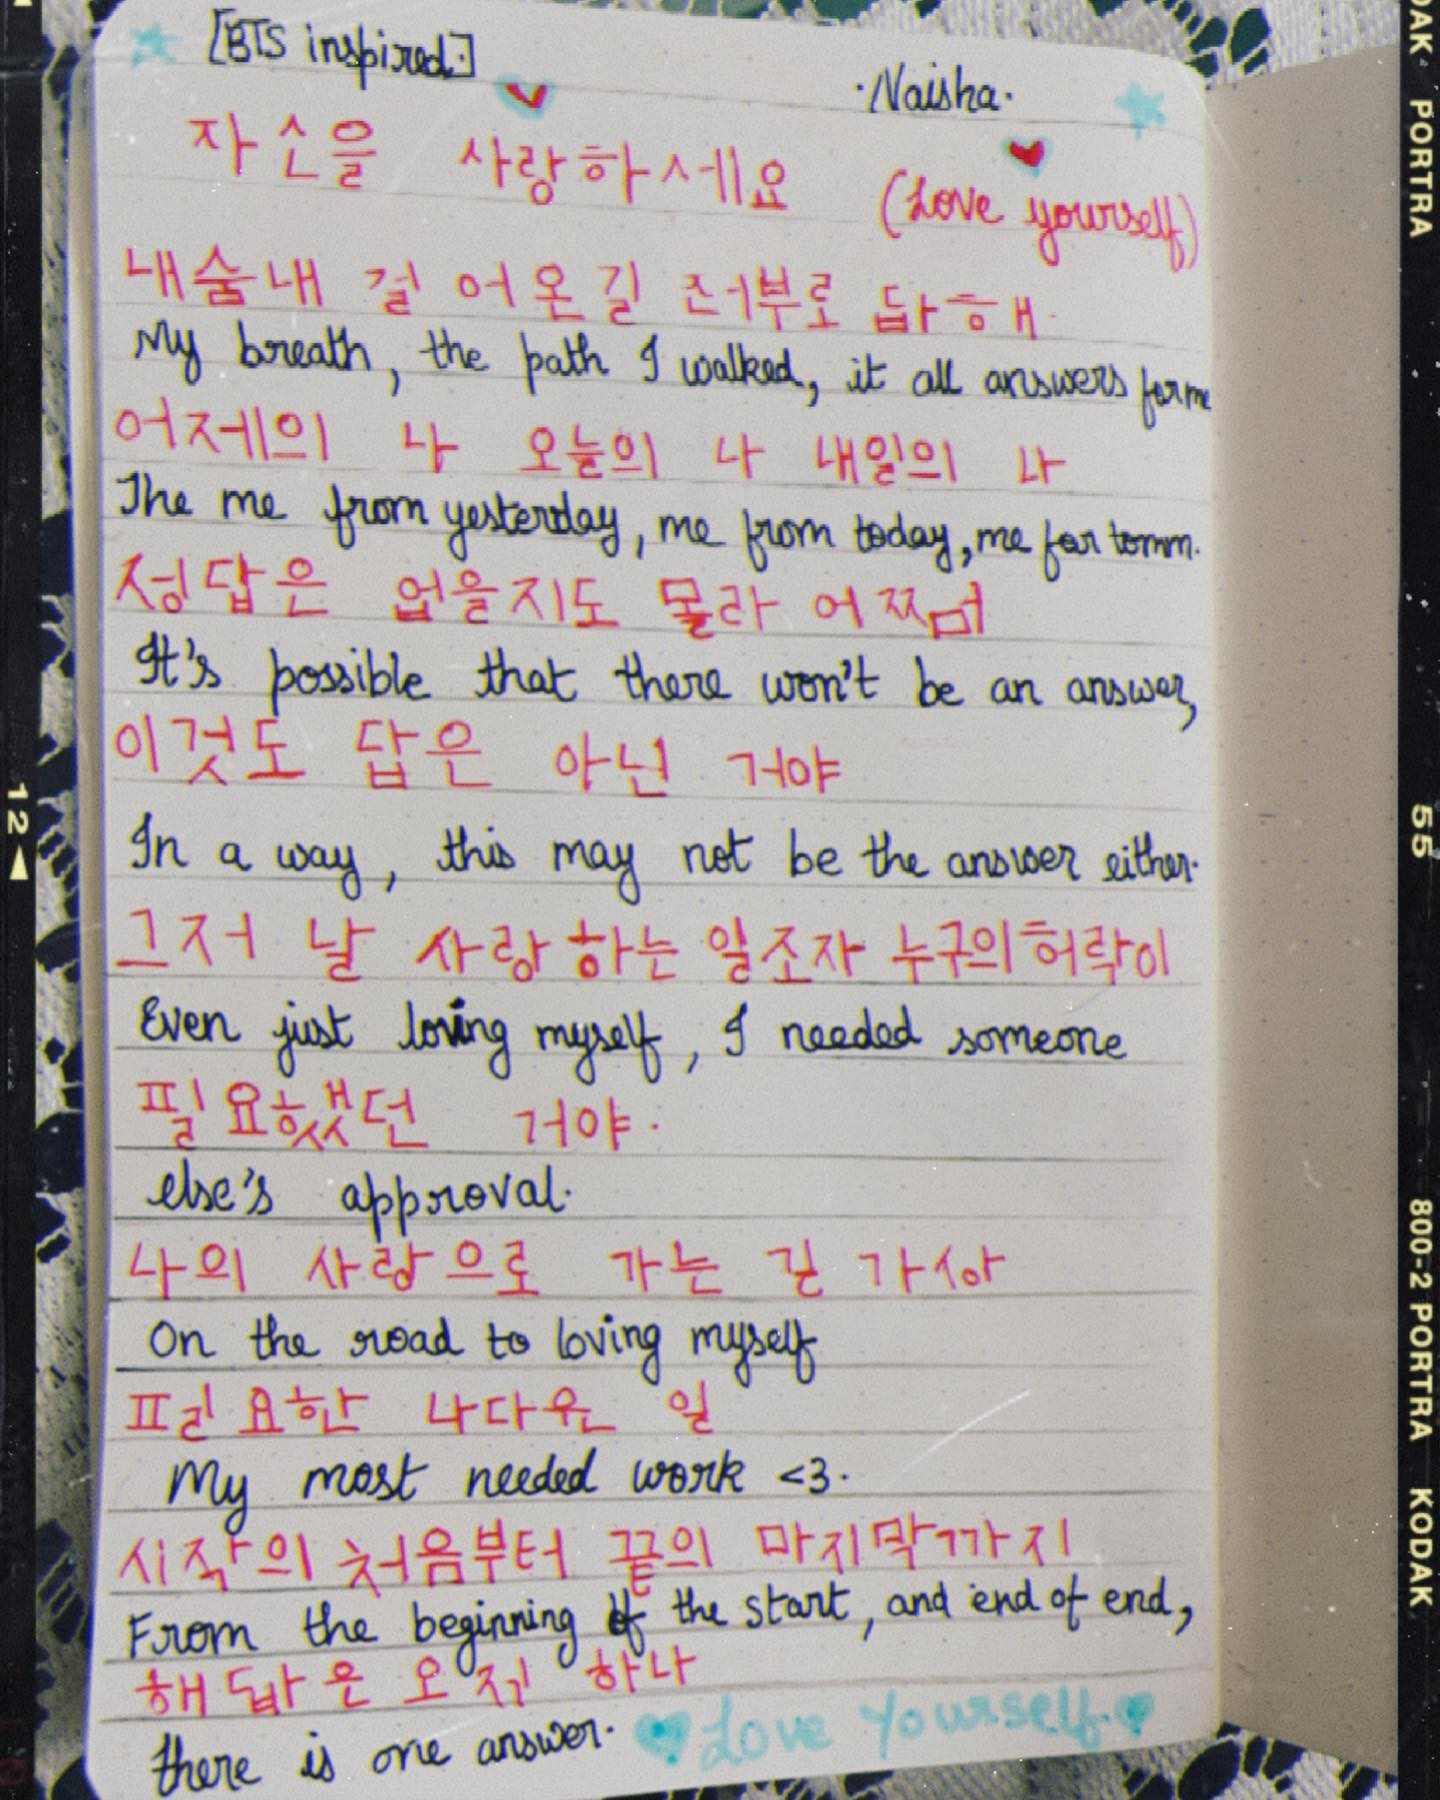 Naisha Khanna's notebook containing lyrics of BTS band